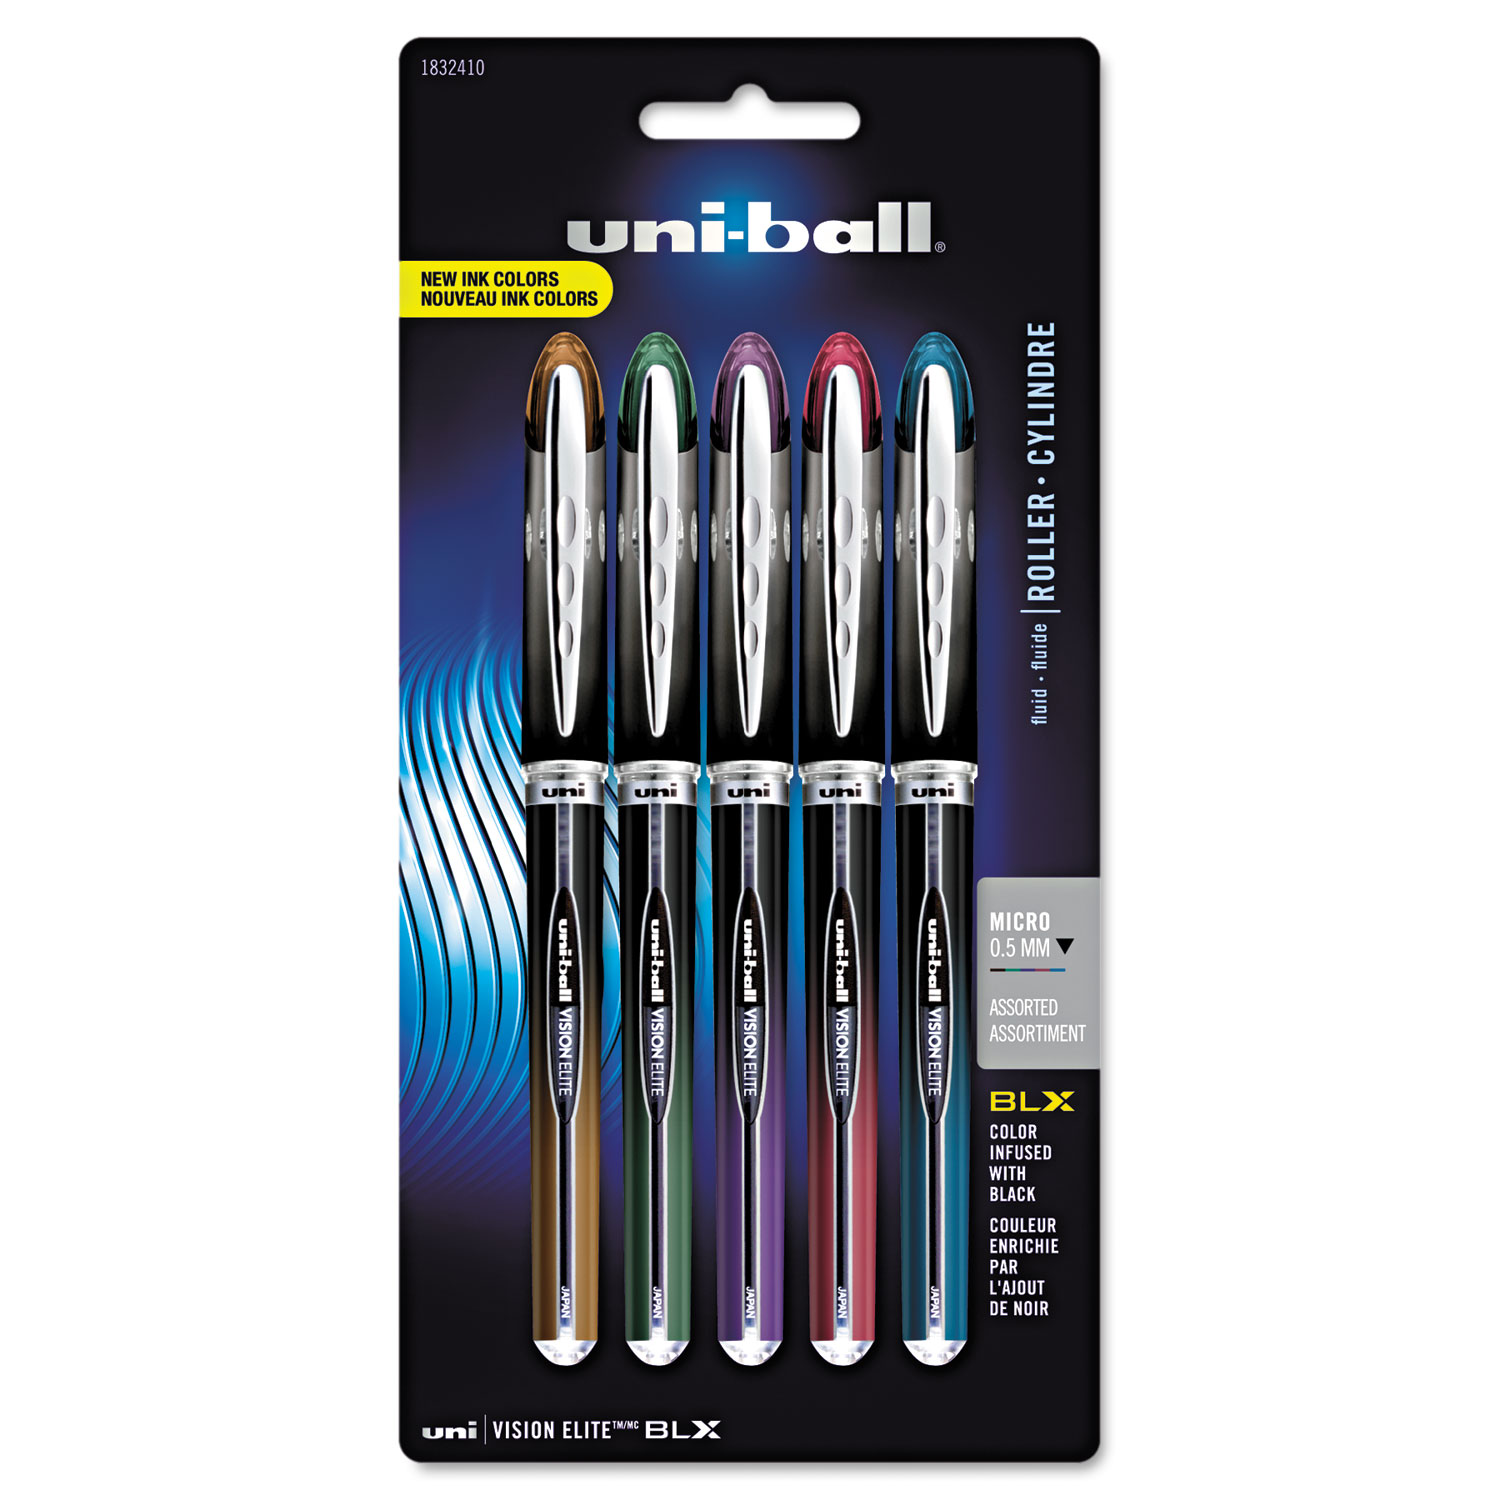  uni-ball 1832410 VISION ELITE BLX Stick Roller Ball Pen, Micro 0.5mm, Assorted Ink/Barrel, 5/Pack (UBC1832410) 